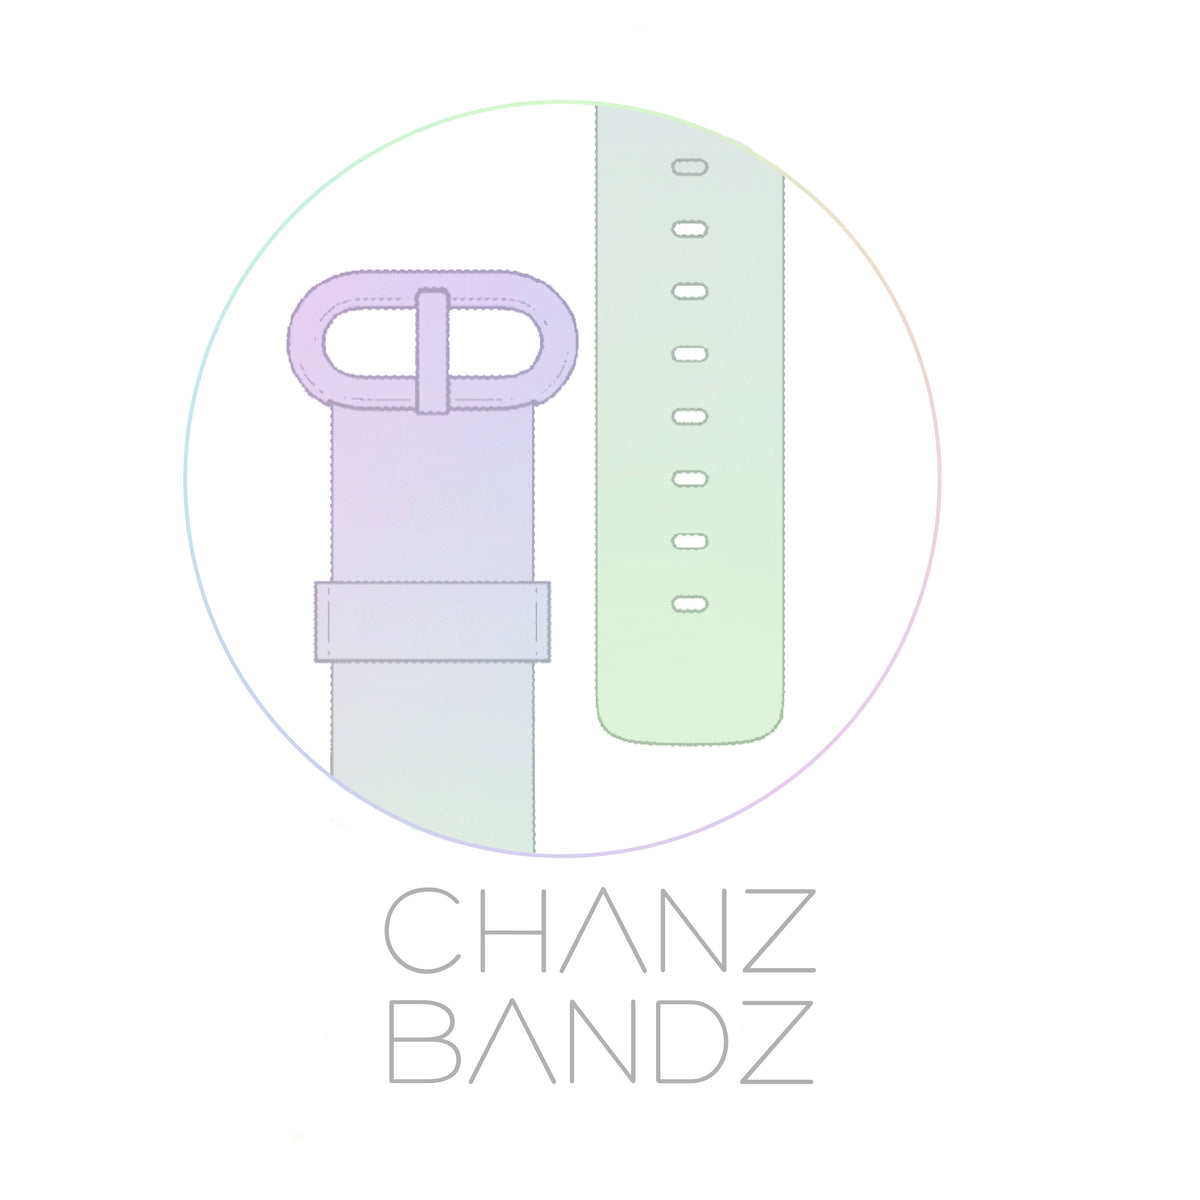 Chanz Bandz